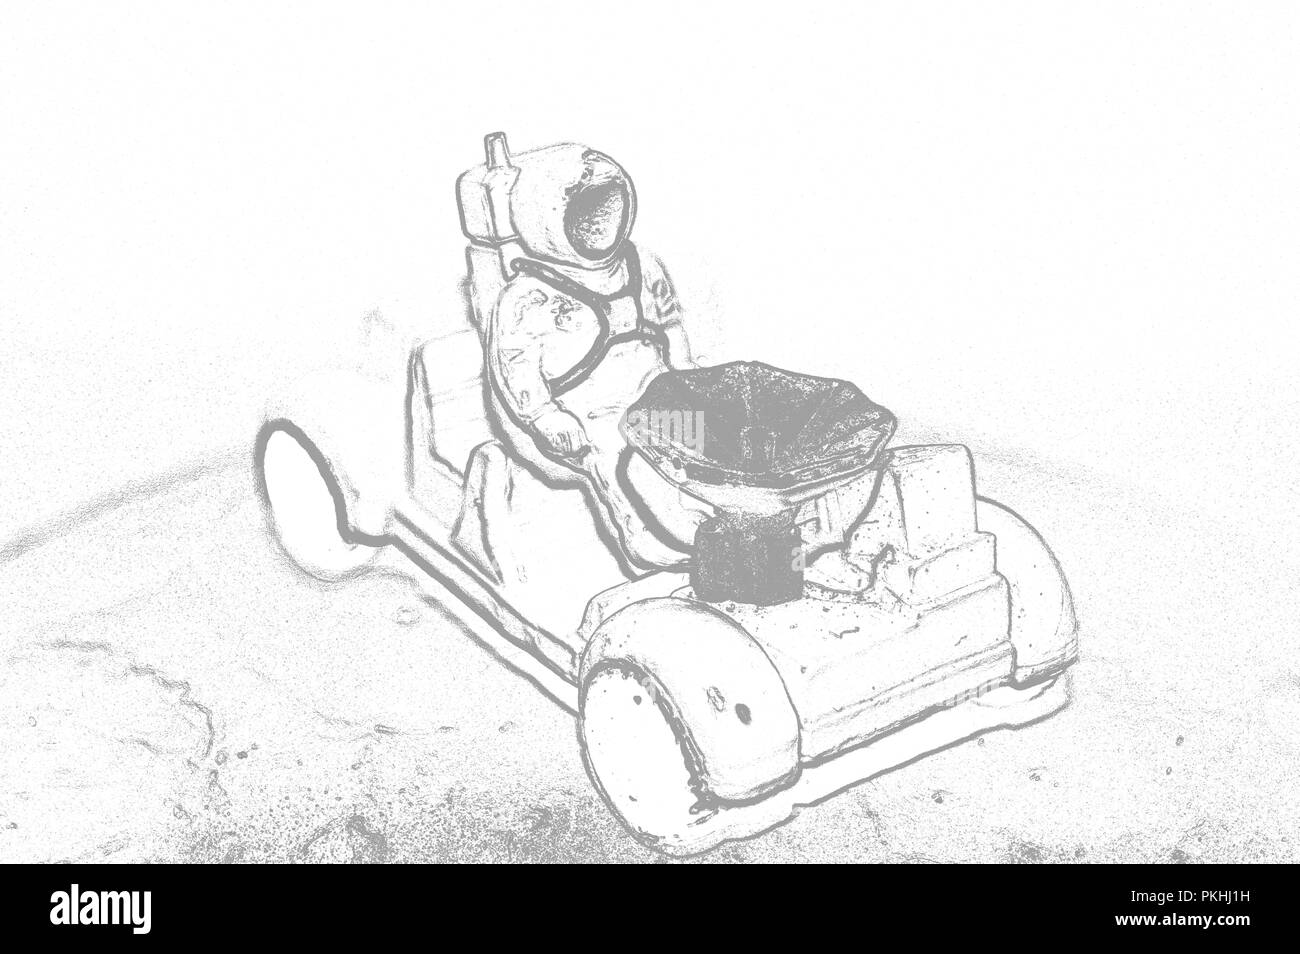 An astronaut on the moon rover on the moon. Illustration Stock Photo